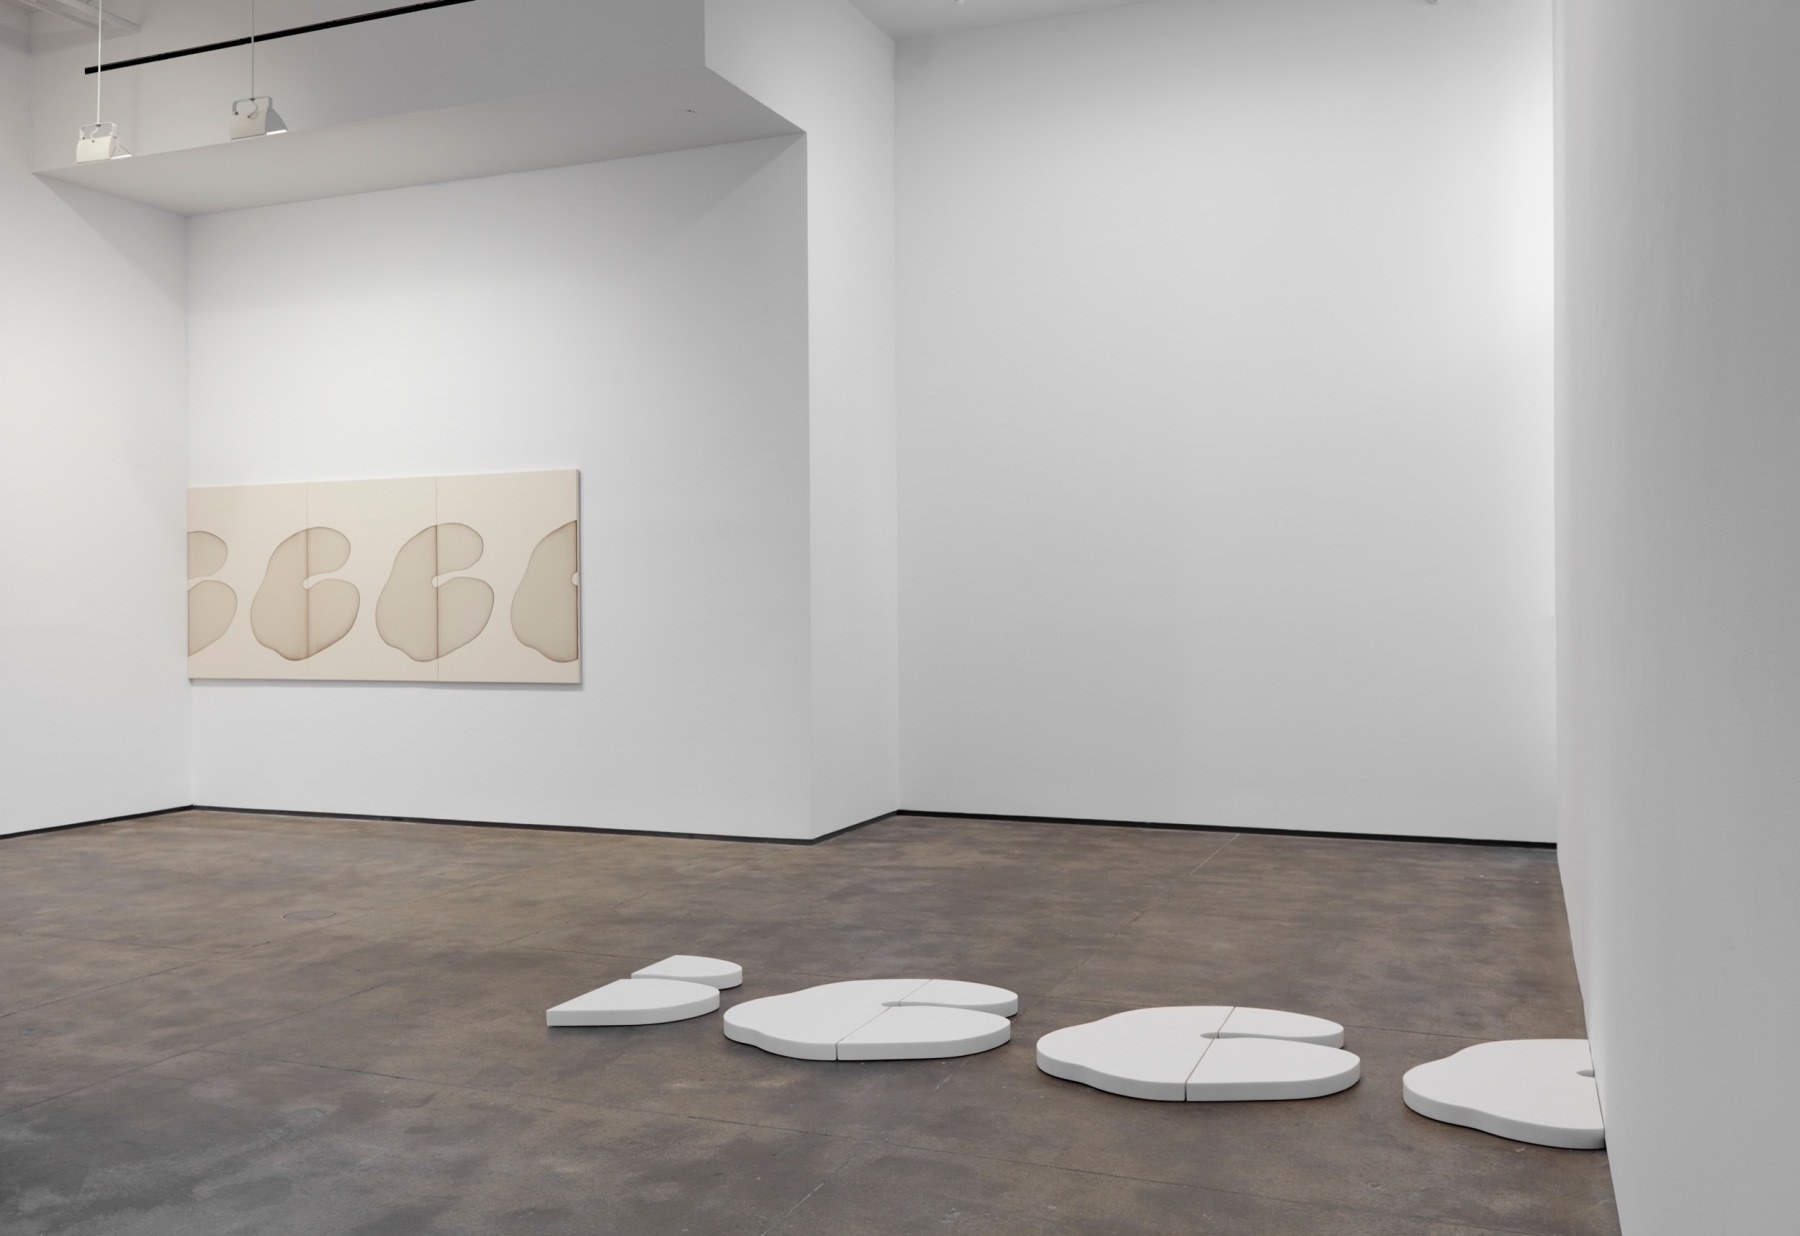 Installation view of Landon Metz:&nbsp;Asymmetrical Symmetry at Sean Kelly, New York